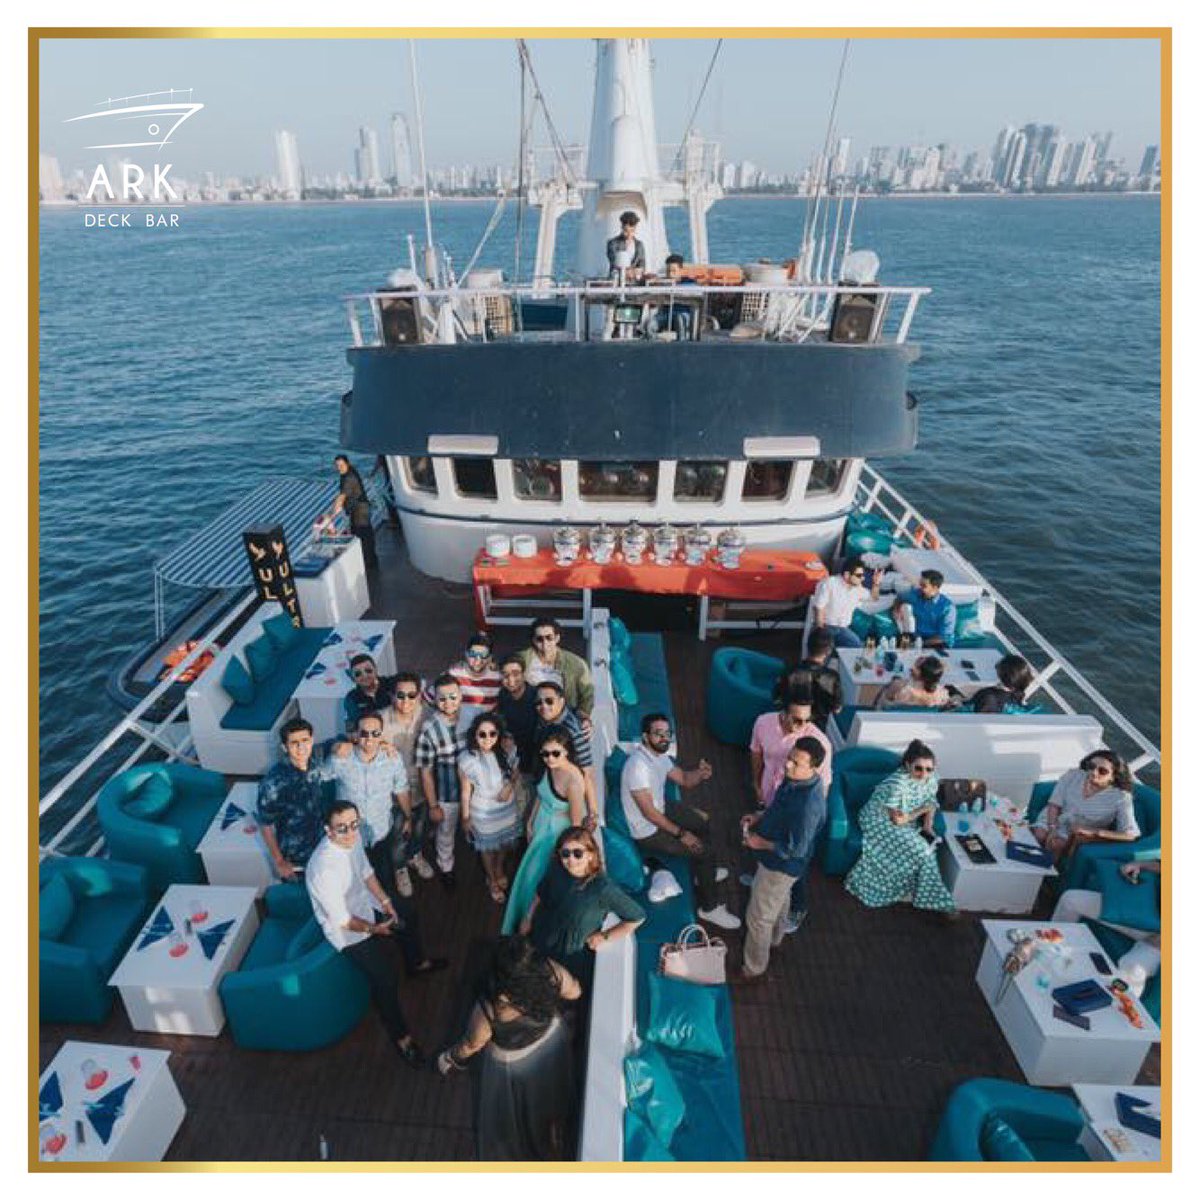 We live for moments like this. Party at sea anyone? 🥂
.
.
.
#floatingsouls #waveparty #memoryatark #celebration #weekendvibes #arkdeckbar #worli #bandra #sealink #reclamation  #yachtparty